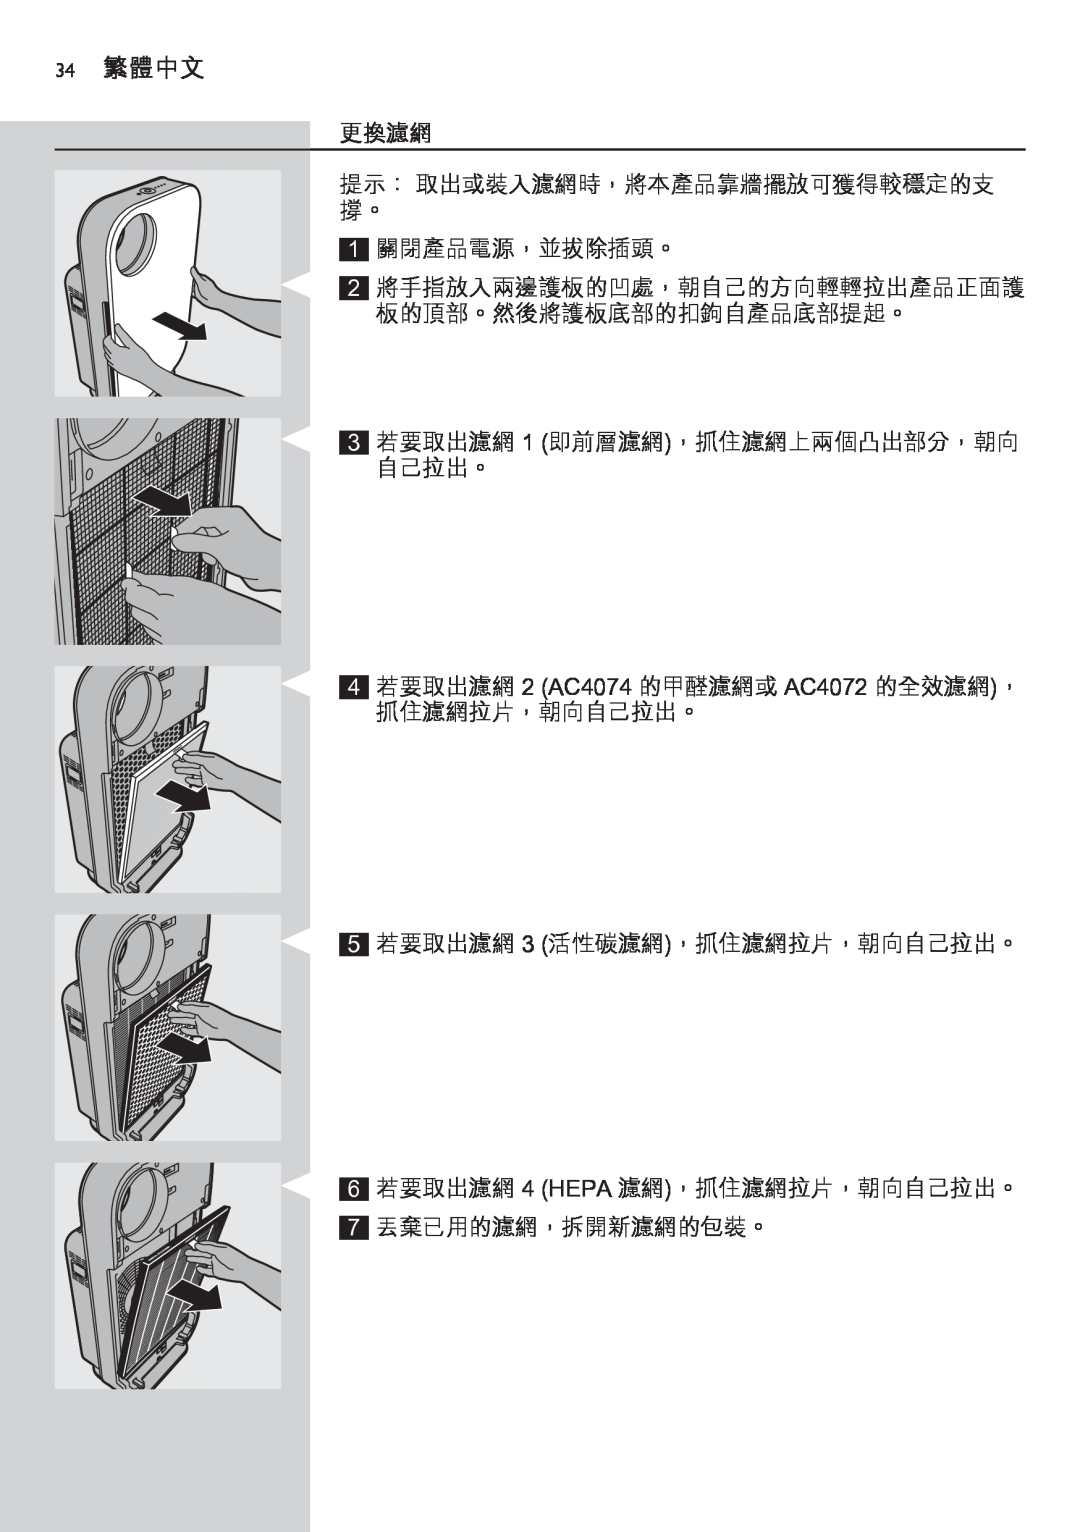 Philips AC4074 manual 34繁體中文, 更換濾網 